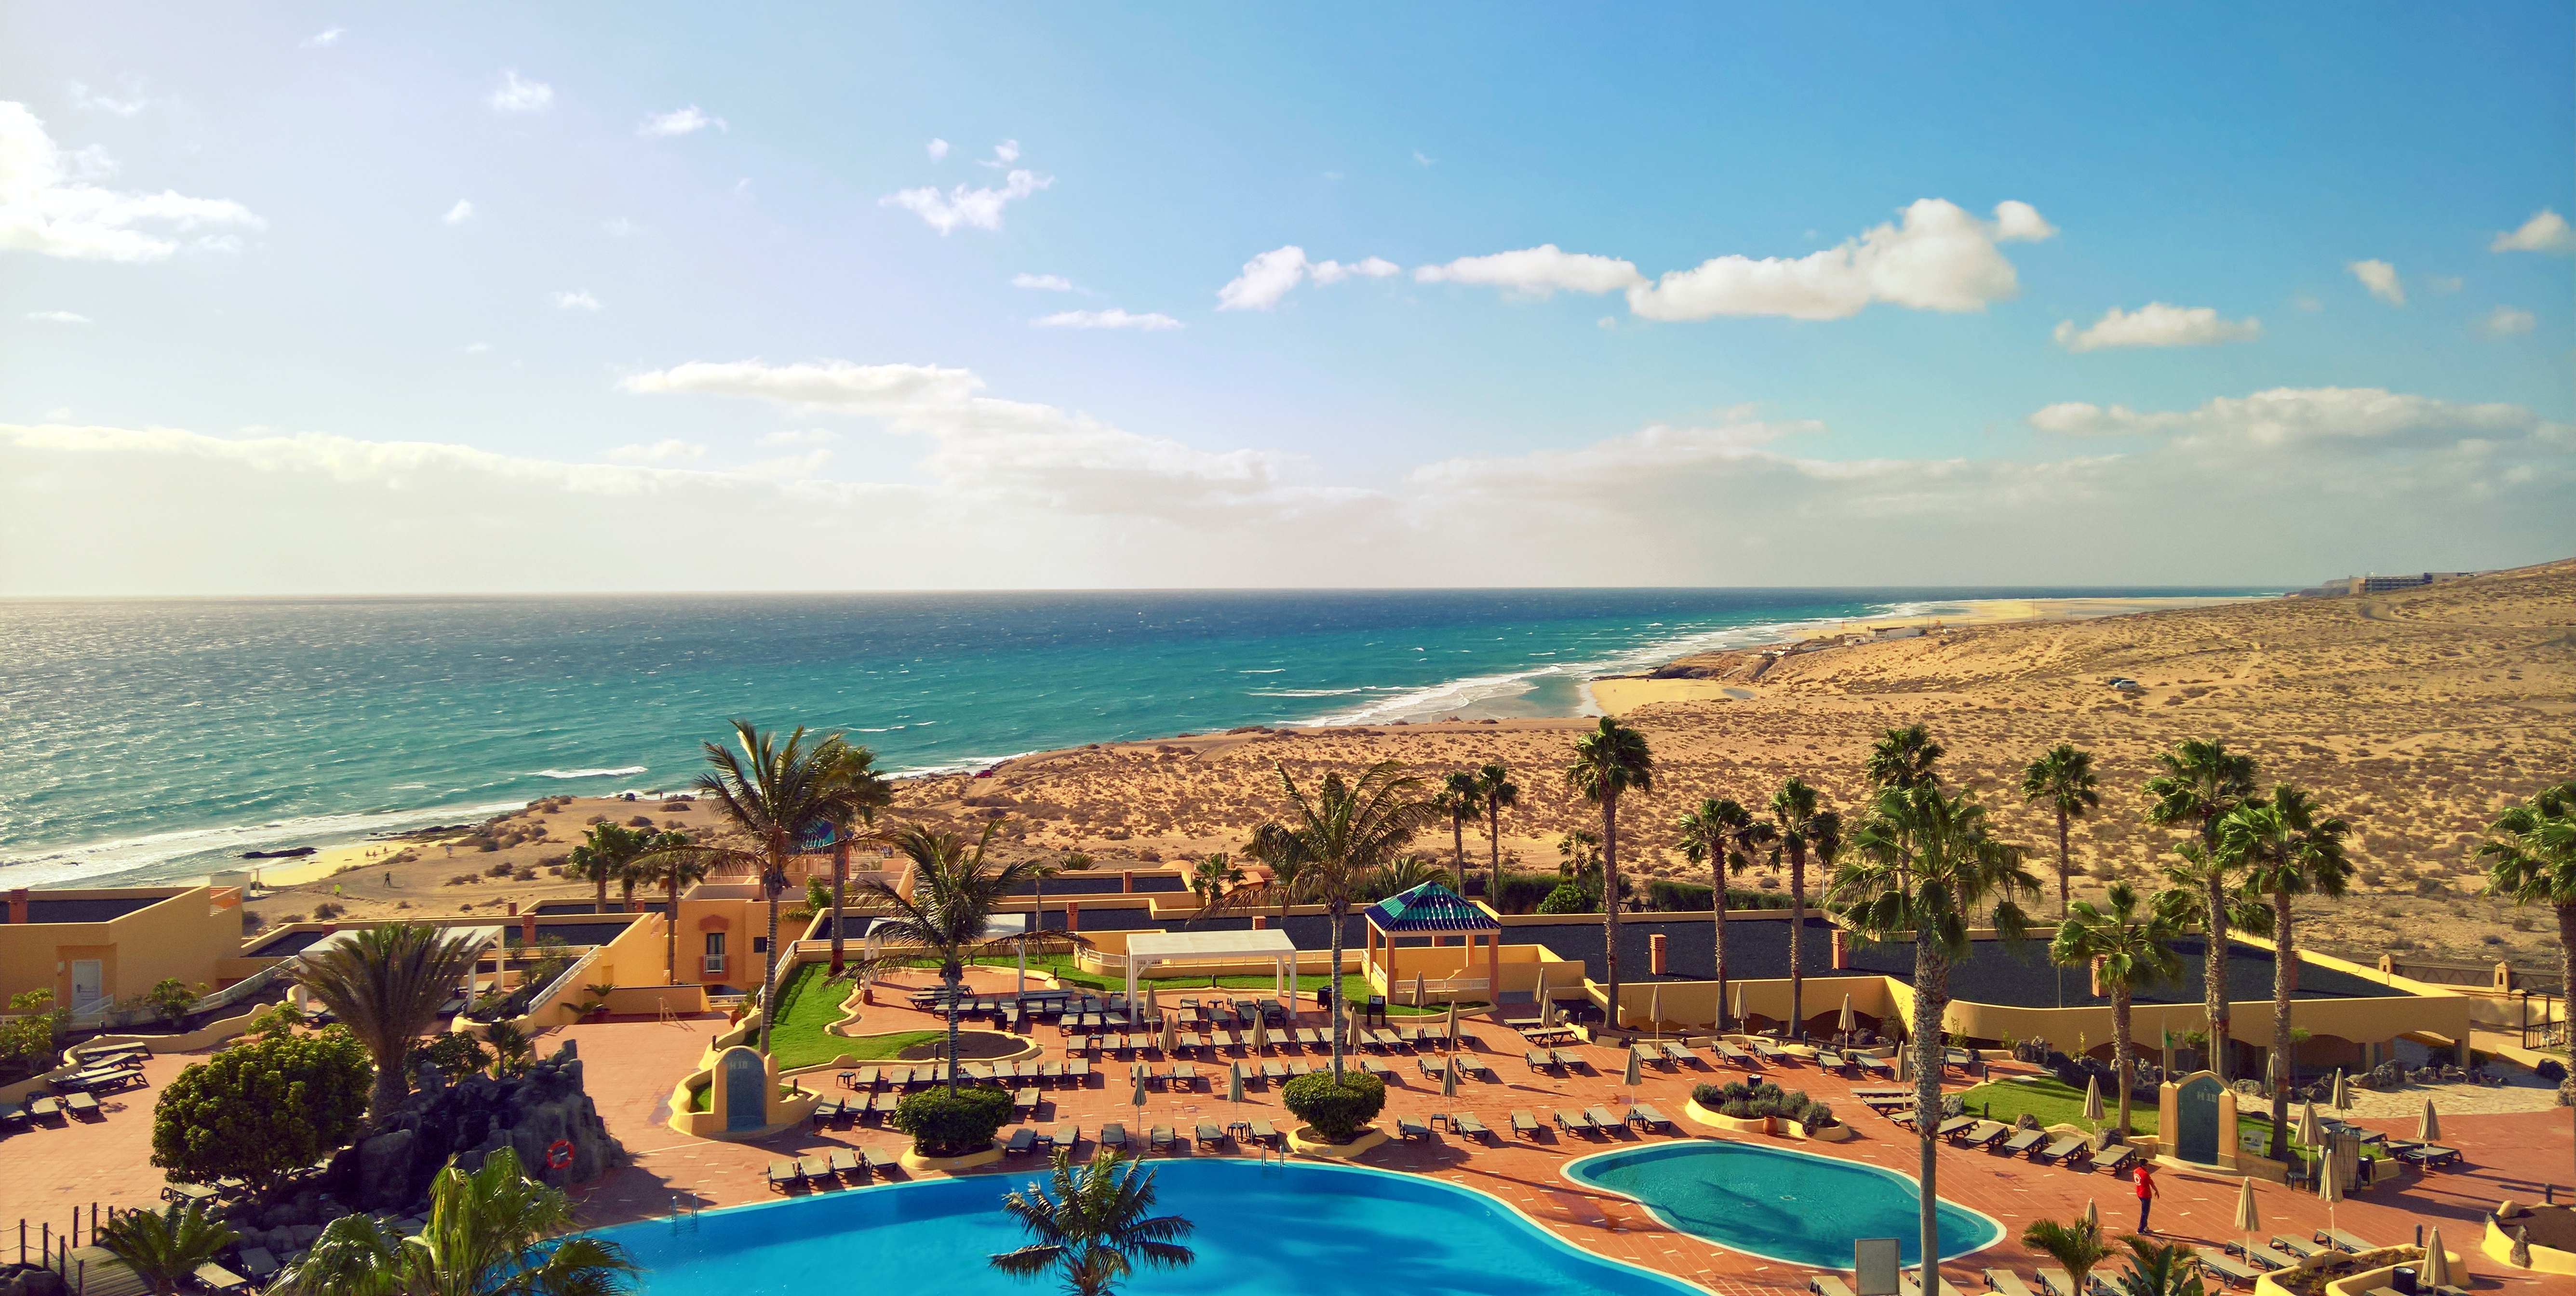 Playa Esmeralda, Fuerteventura